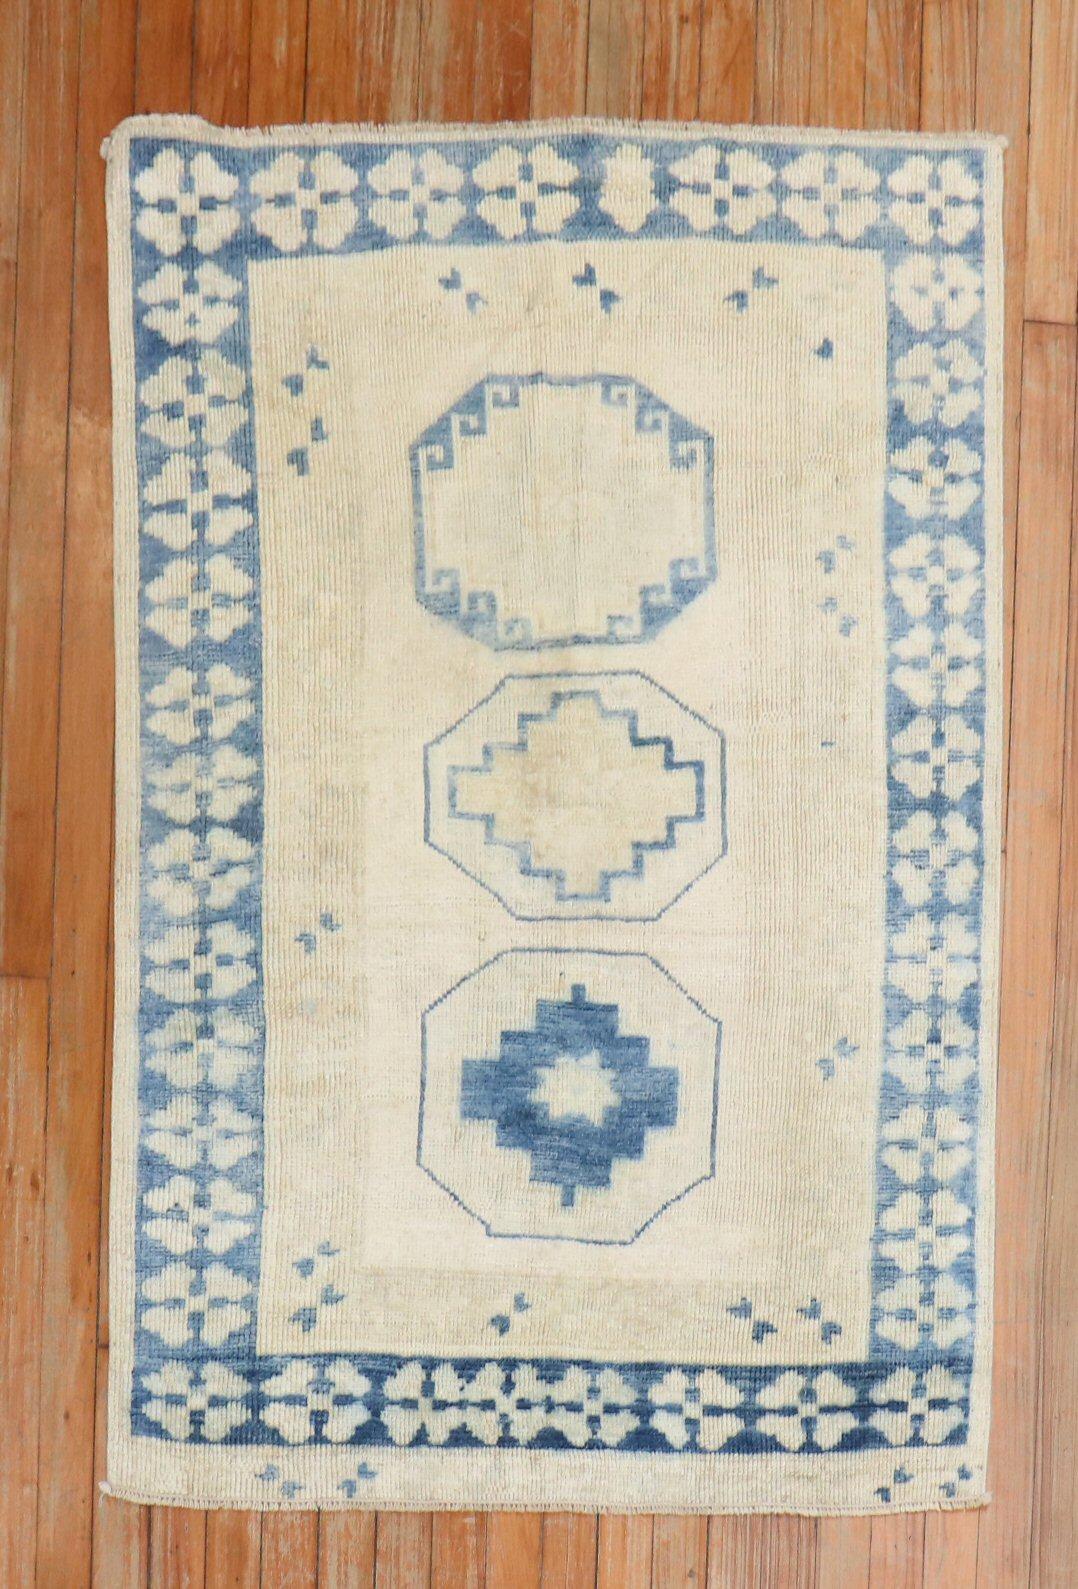 Mid 20th century Turkish rug in beige and denim blue

Measures: 3' x 4'3''.